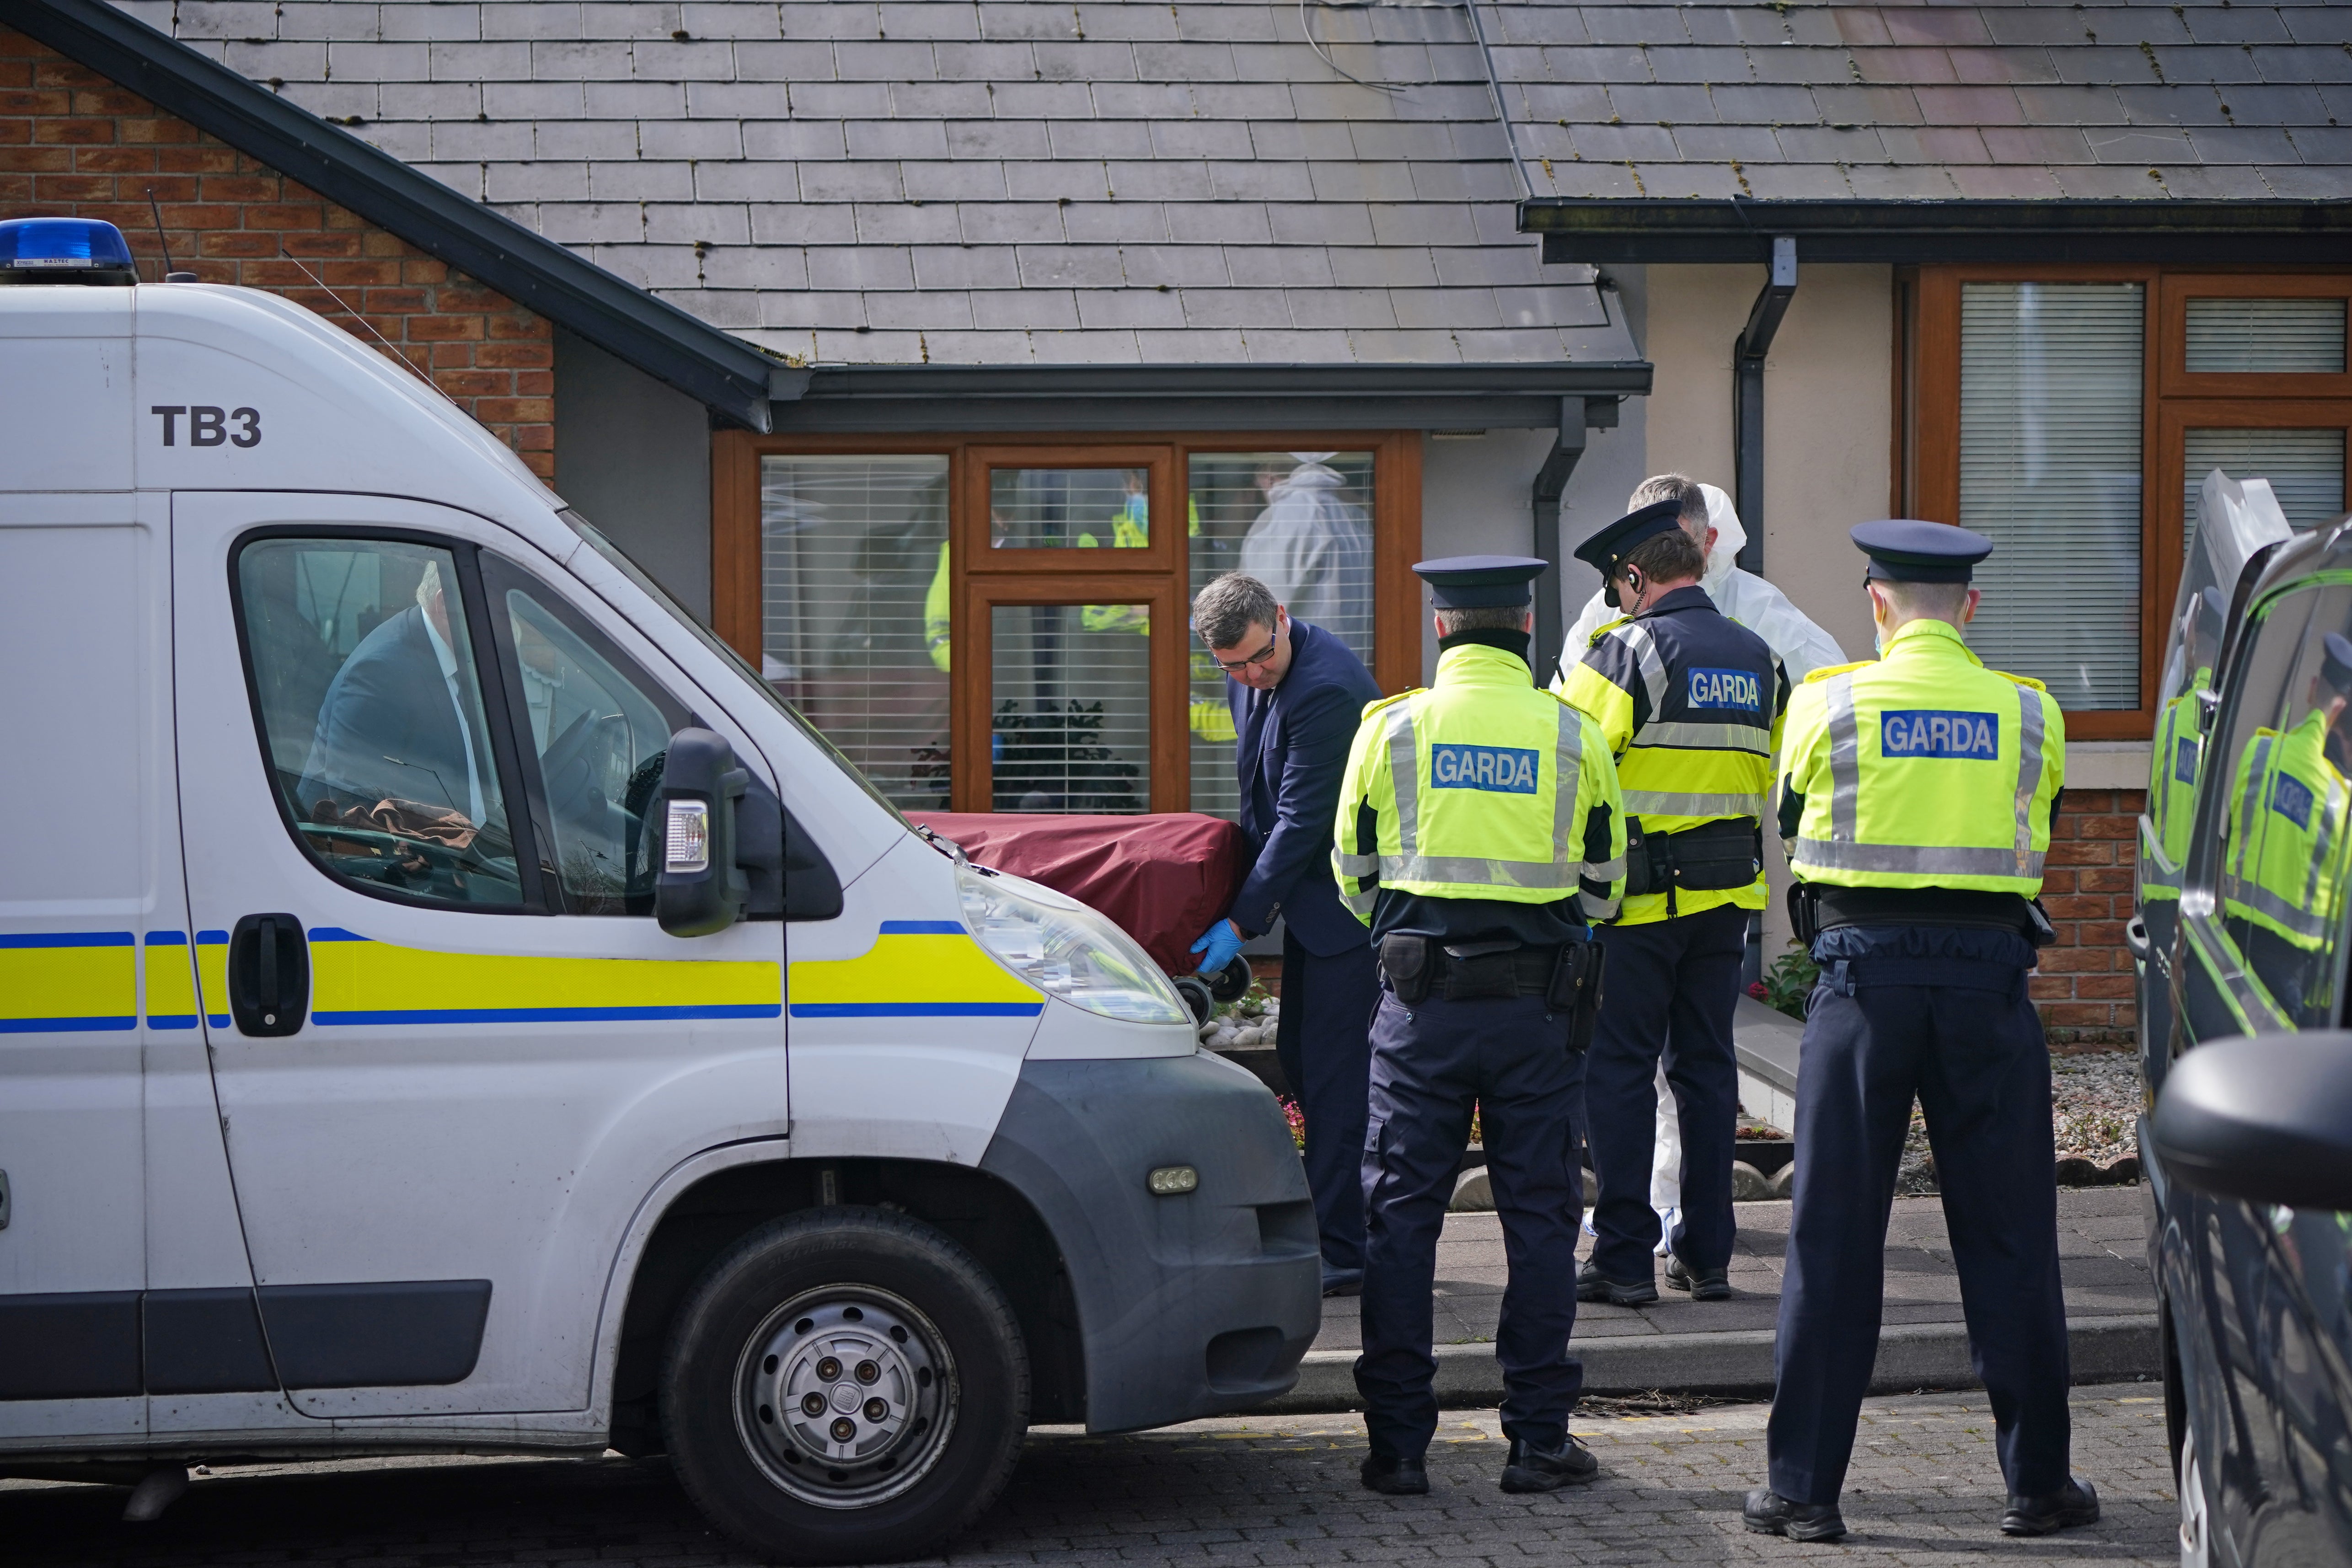 Gardai remove the body of Michael Snee from his home in Sligo (Niall Carson/PA)